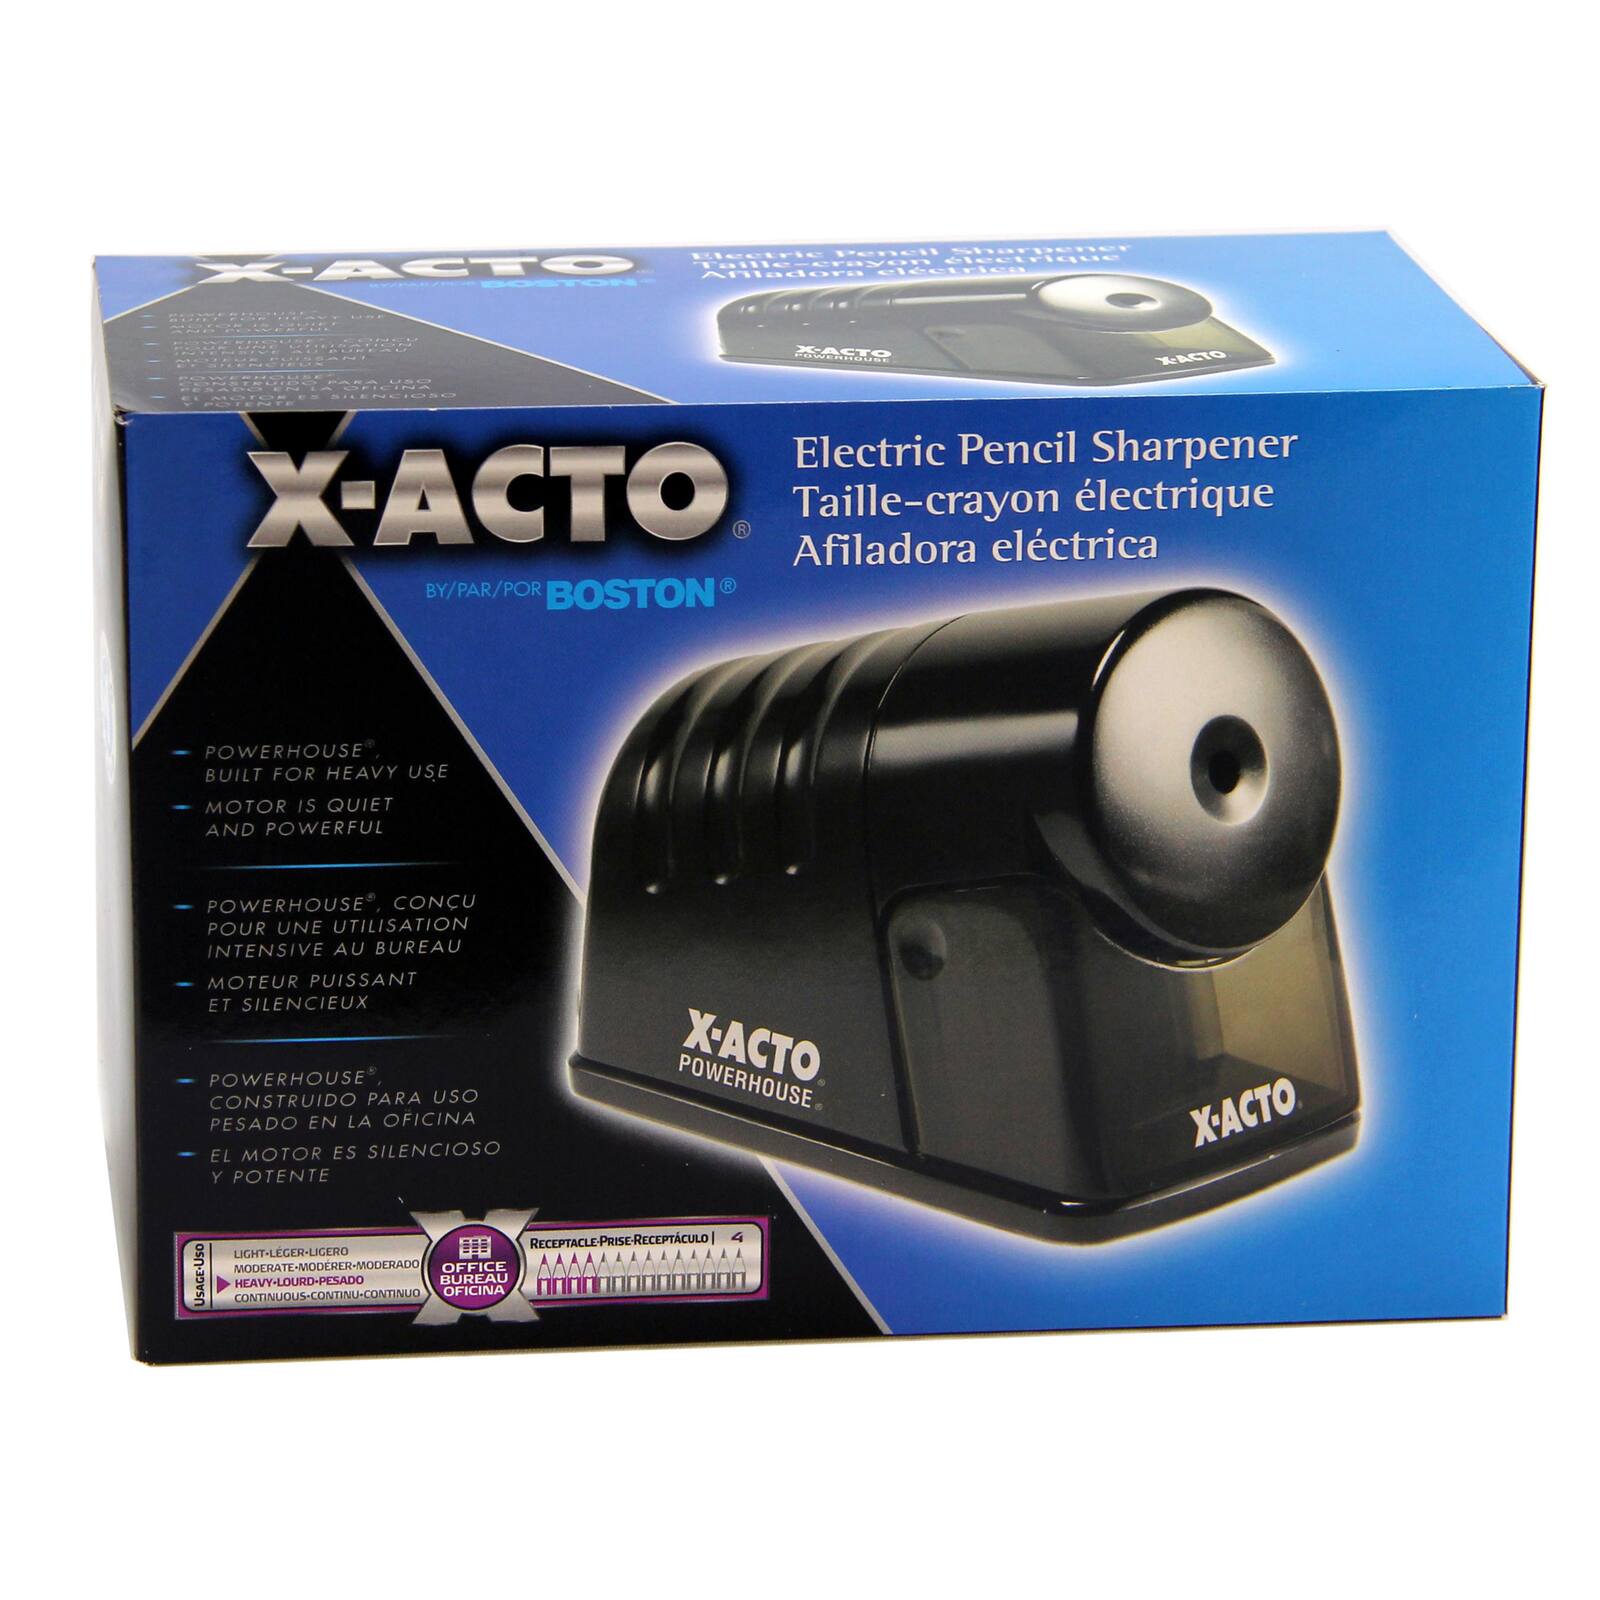 X-ACTO 1799 Powerhouse Electric Pencil Sharpener Black for sale online 